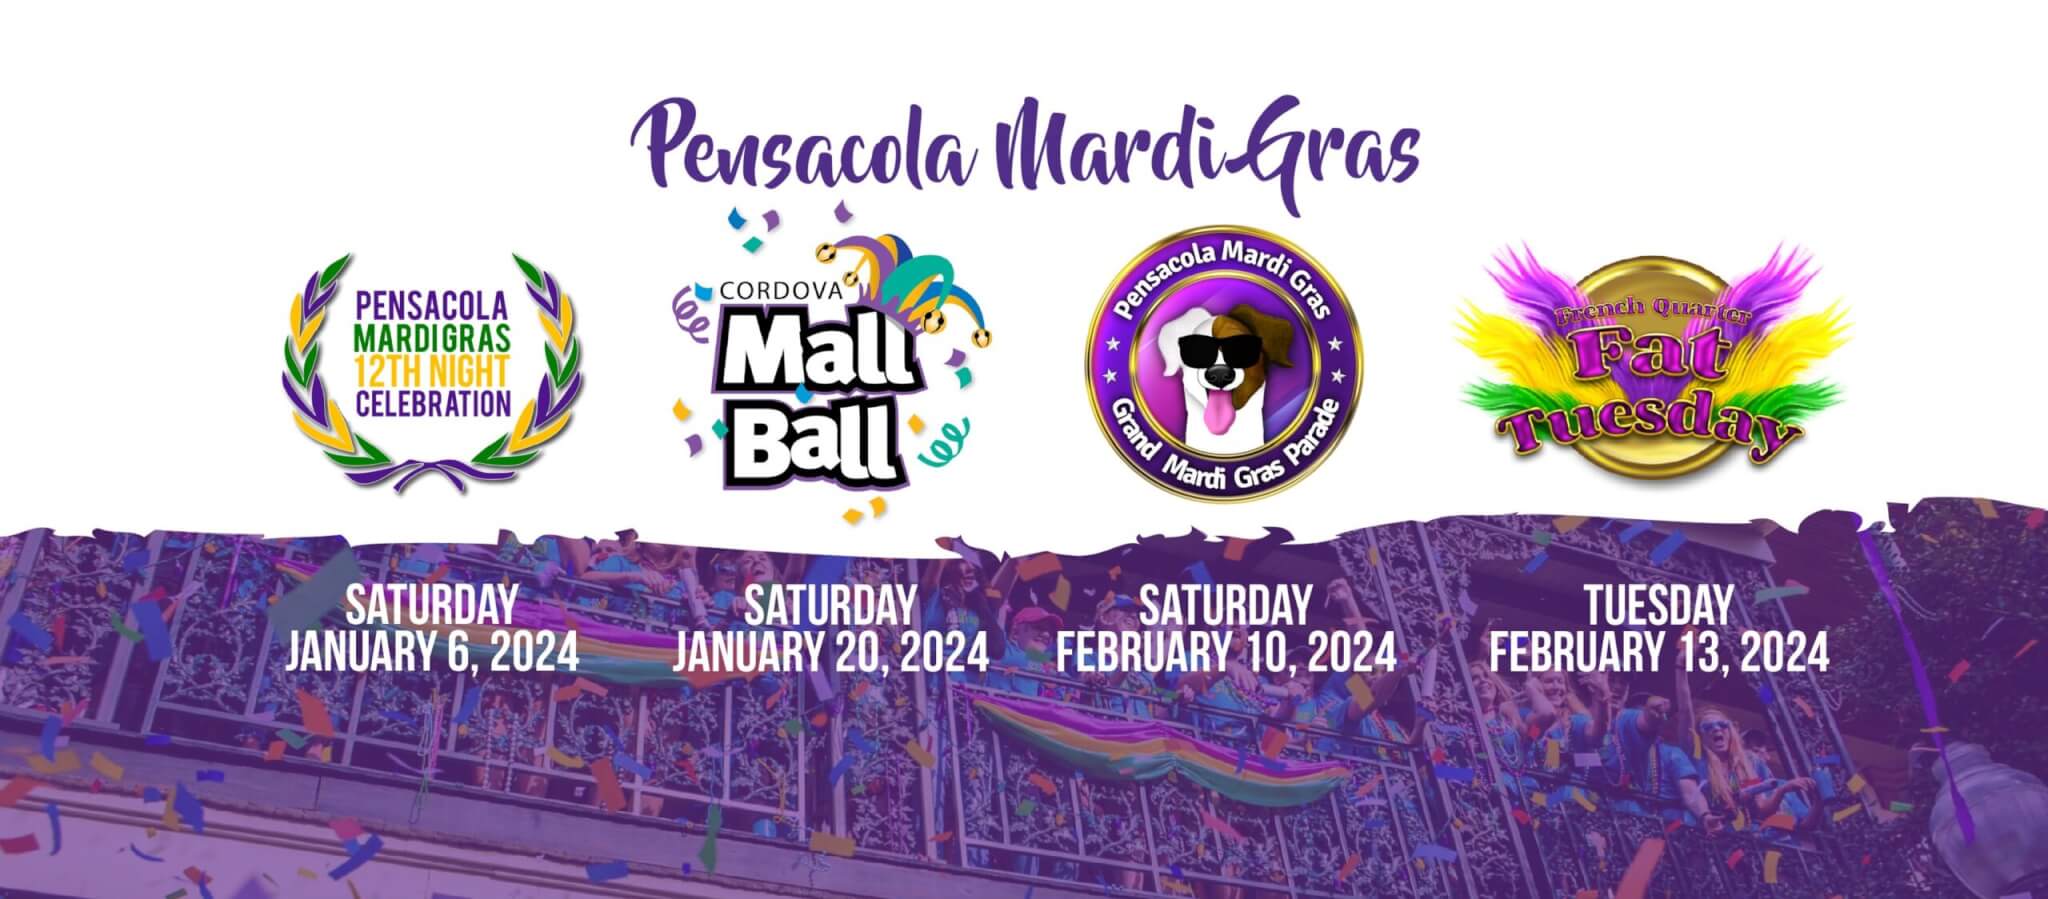 Pensacola Mardi Gras Promotional Flyer. 